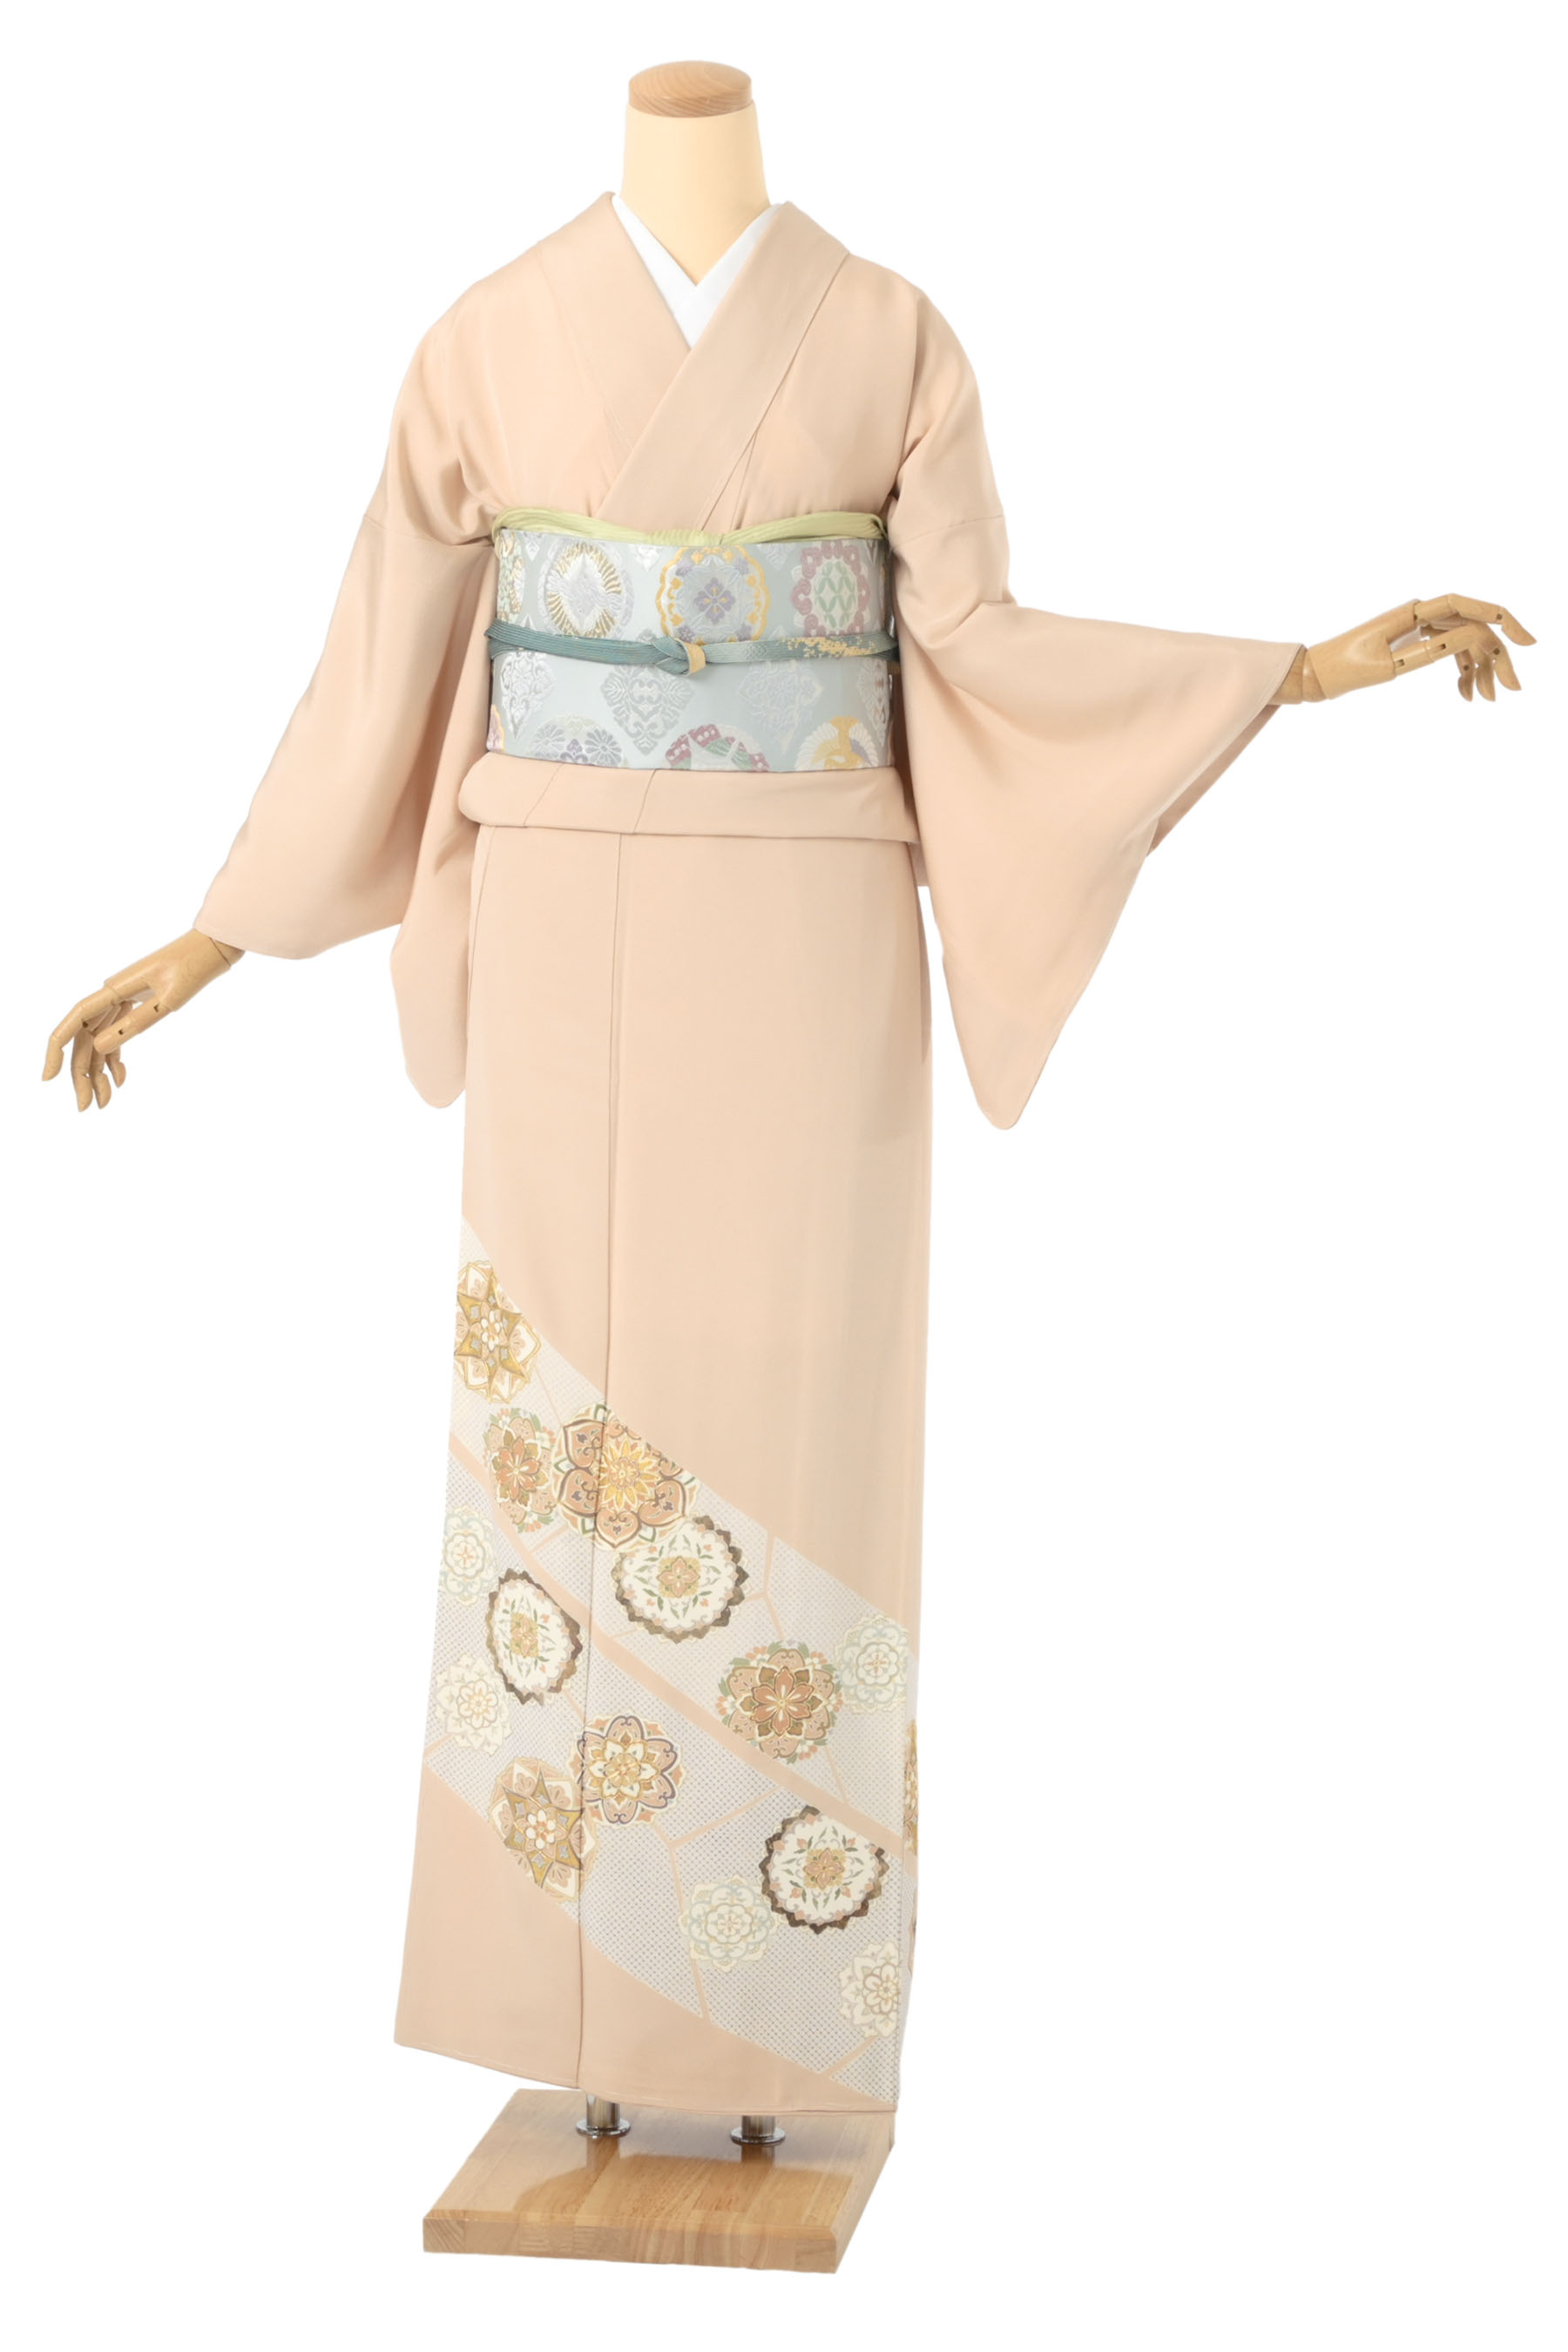 AQK 三越 優雅な藤花に扇 礼装特集 高級留袖 裄たっぷり67cm 